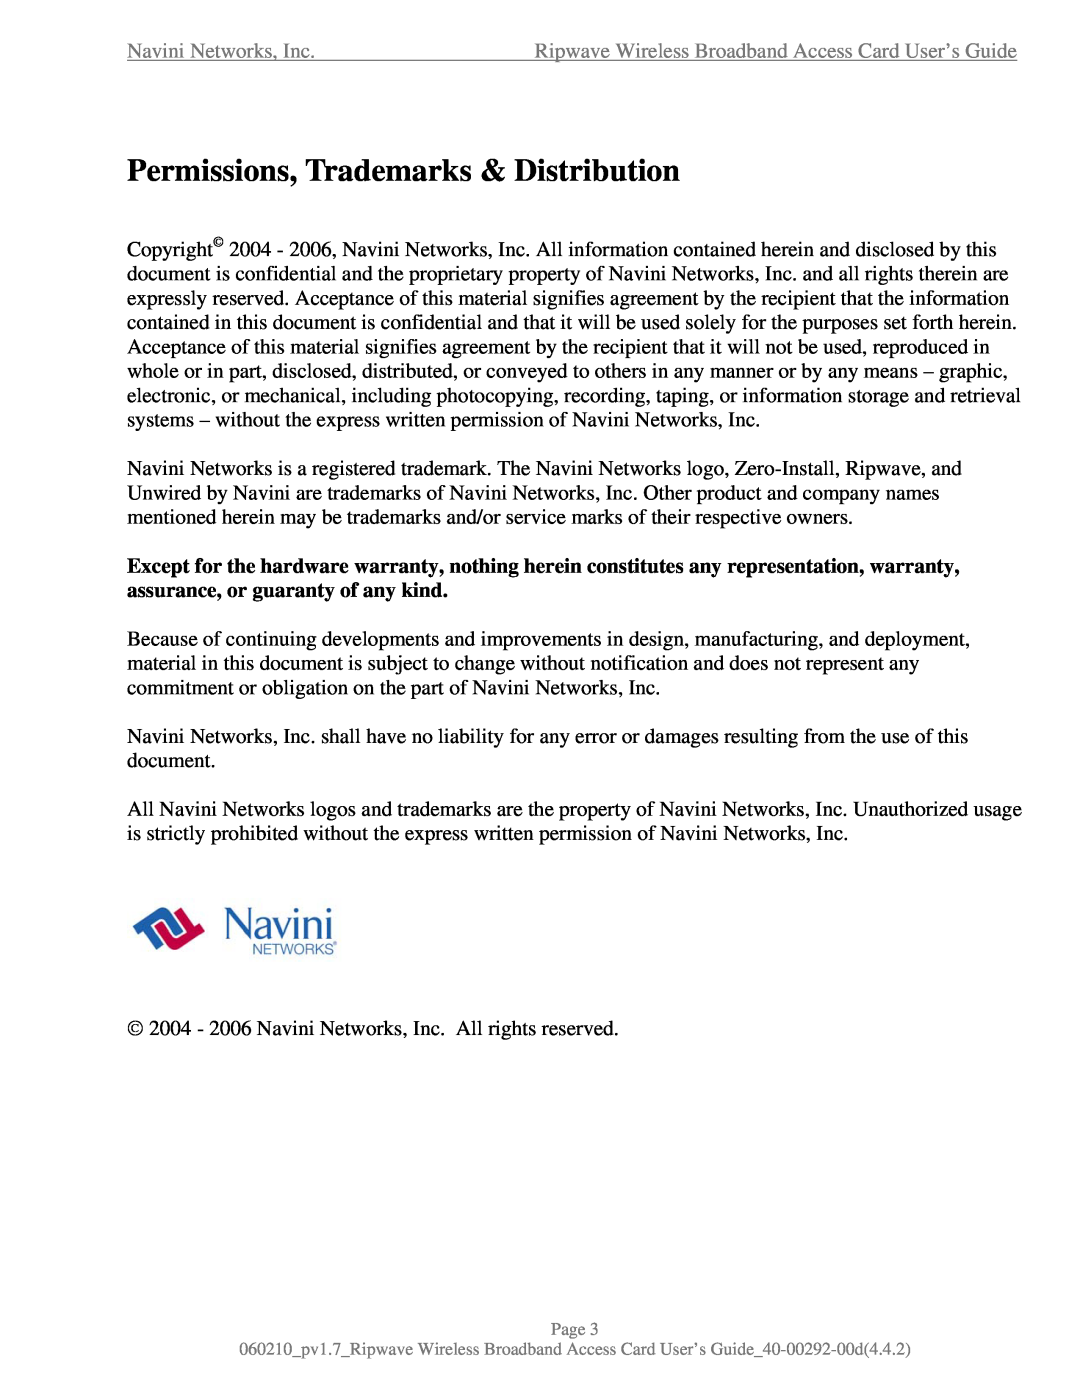 Navini Networks 40-00292-00 manual Permissions, Trademarks & Distribution, Navini Networks, Inc 